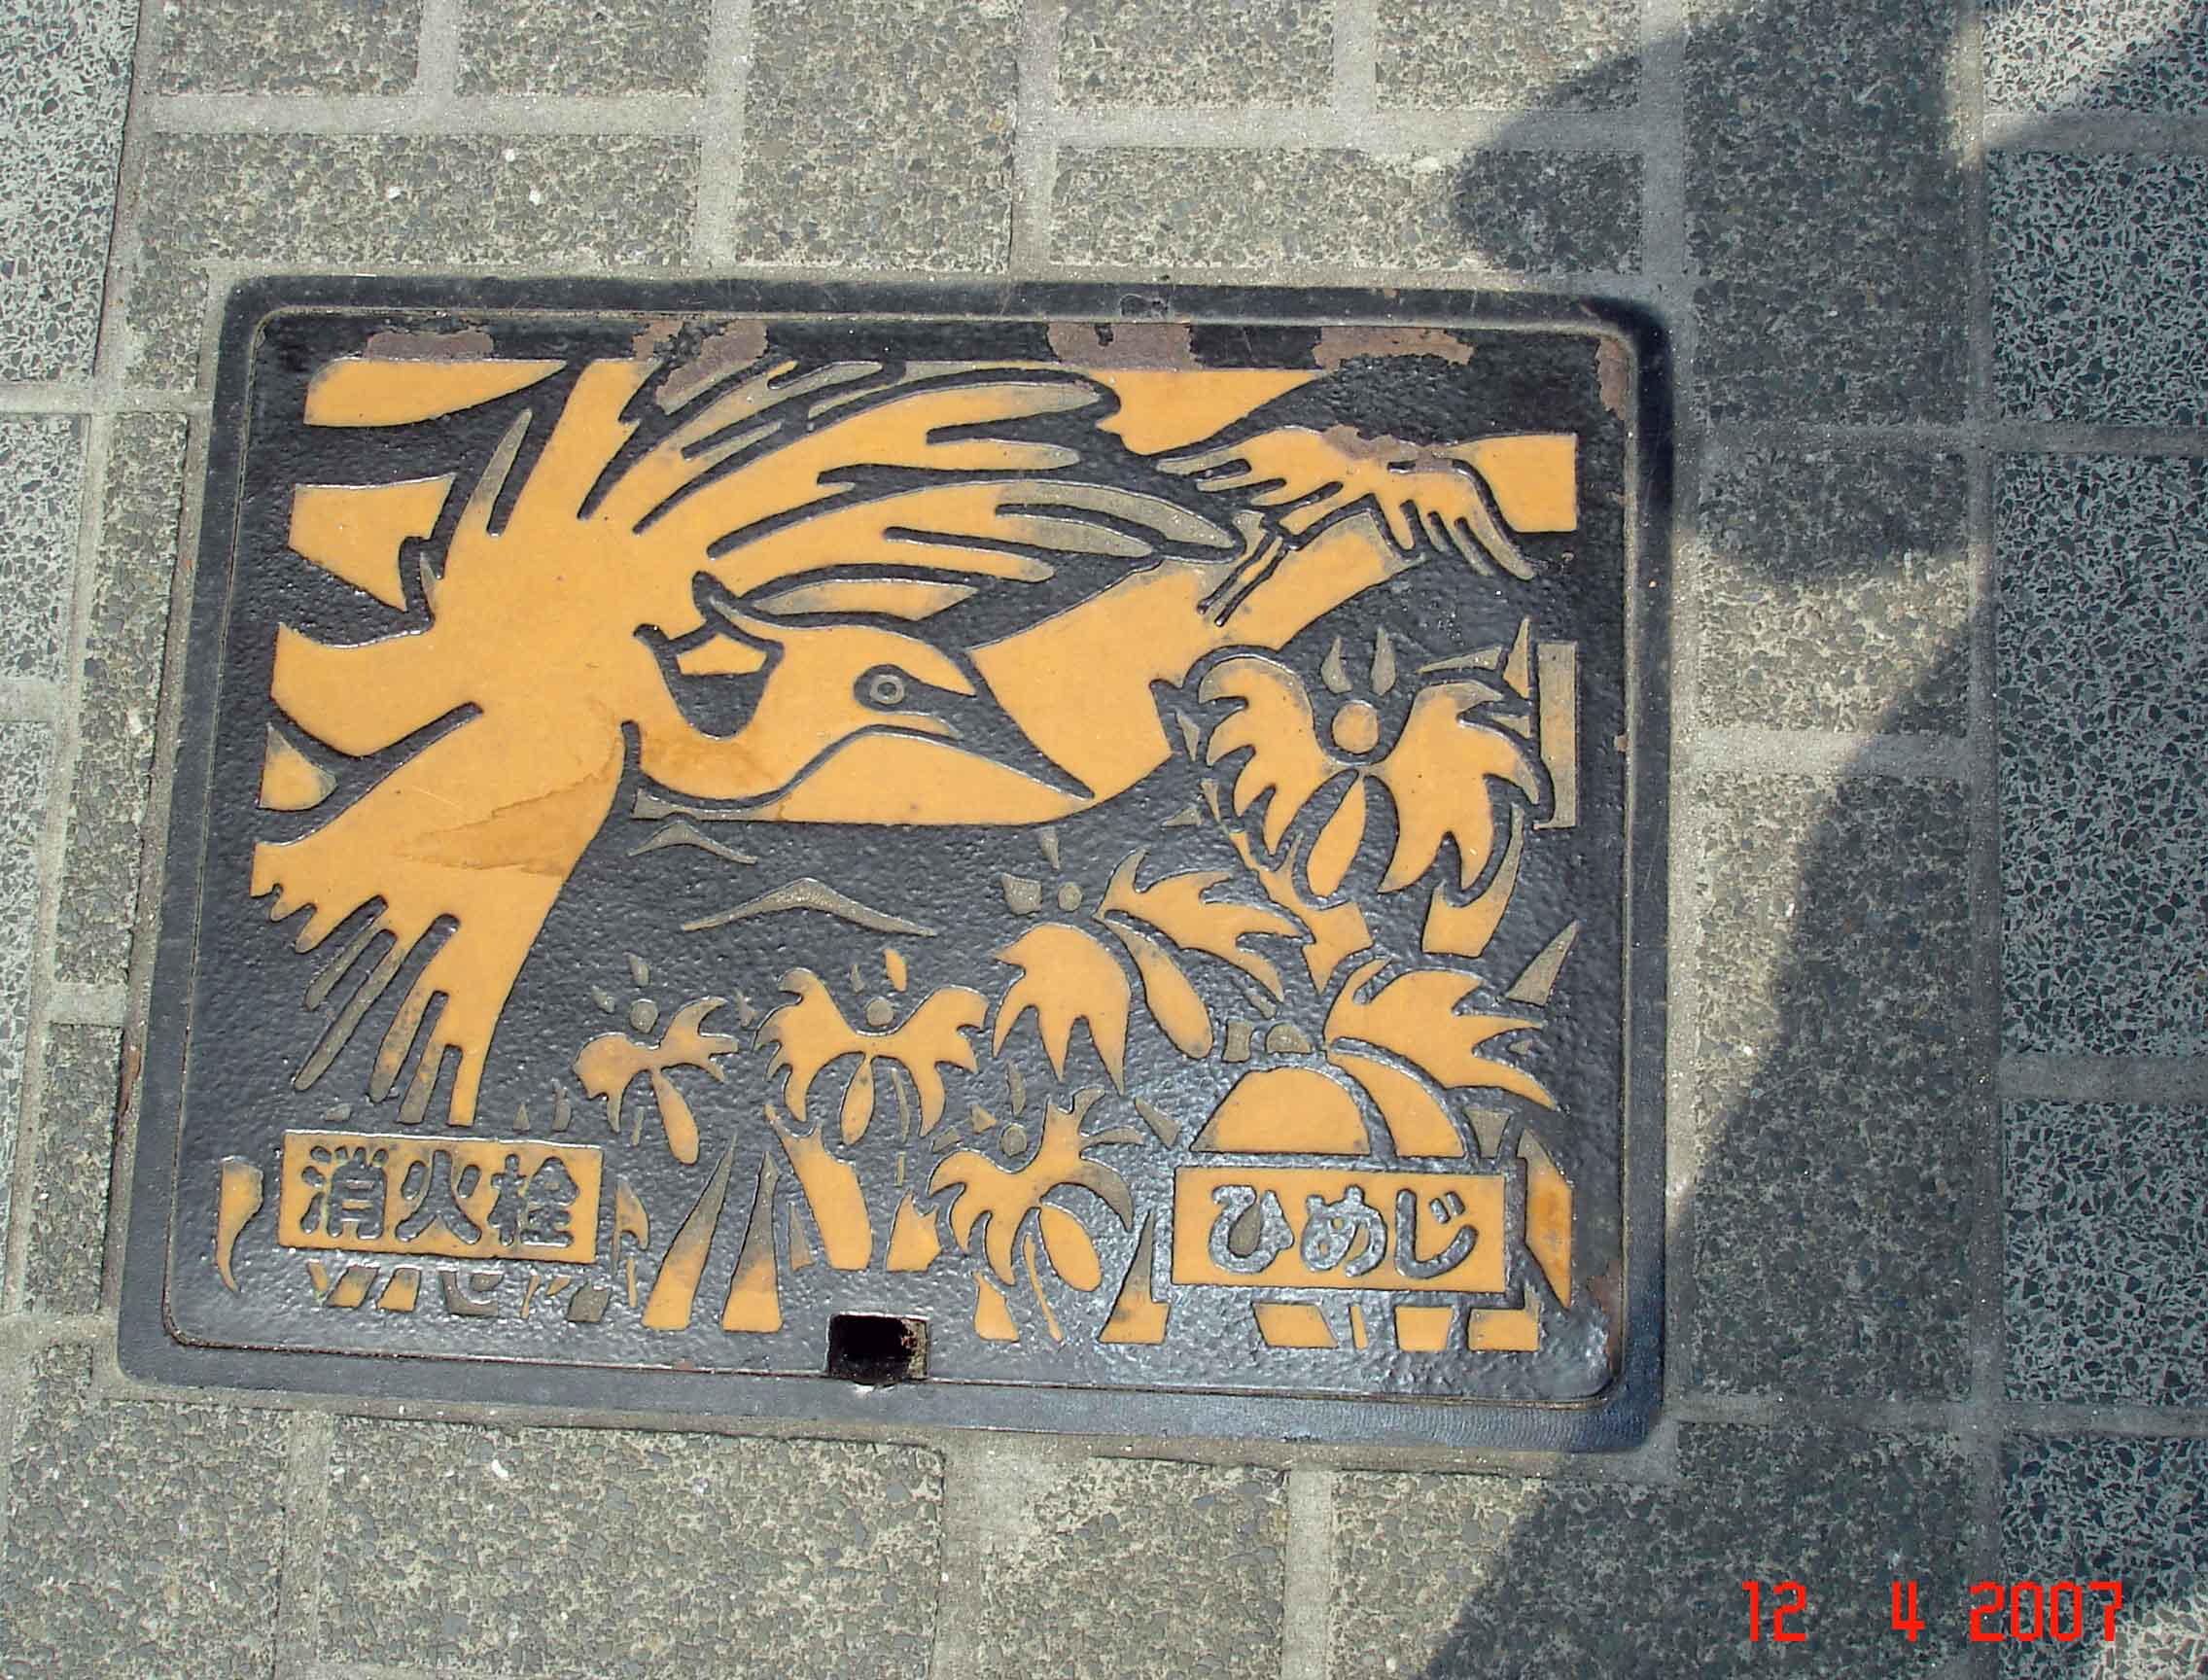 Himeji Castle symbol - street grates flying white heron